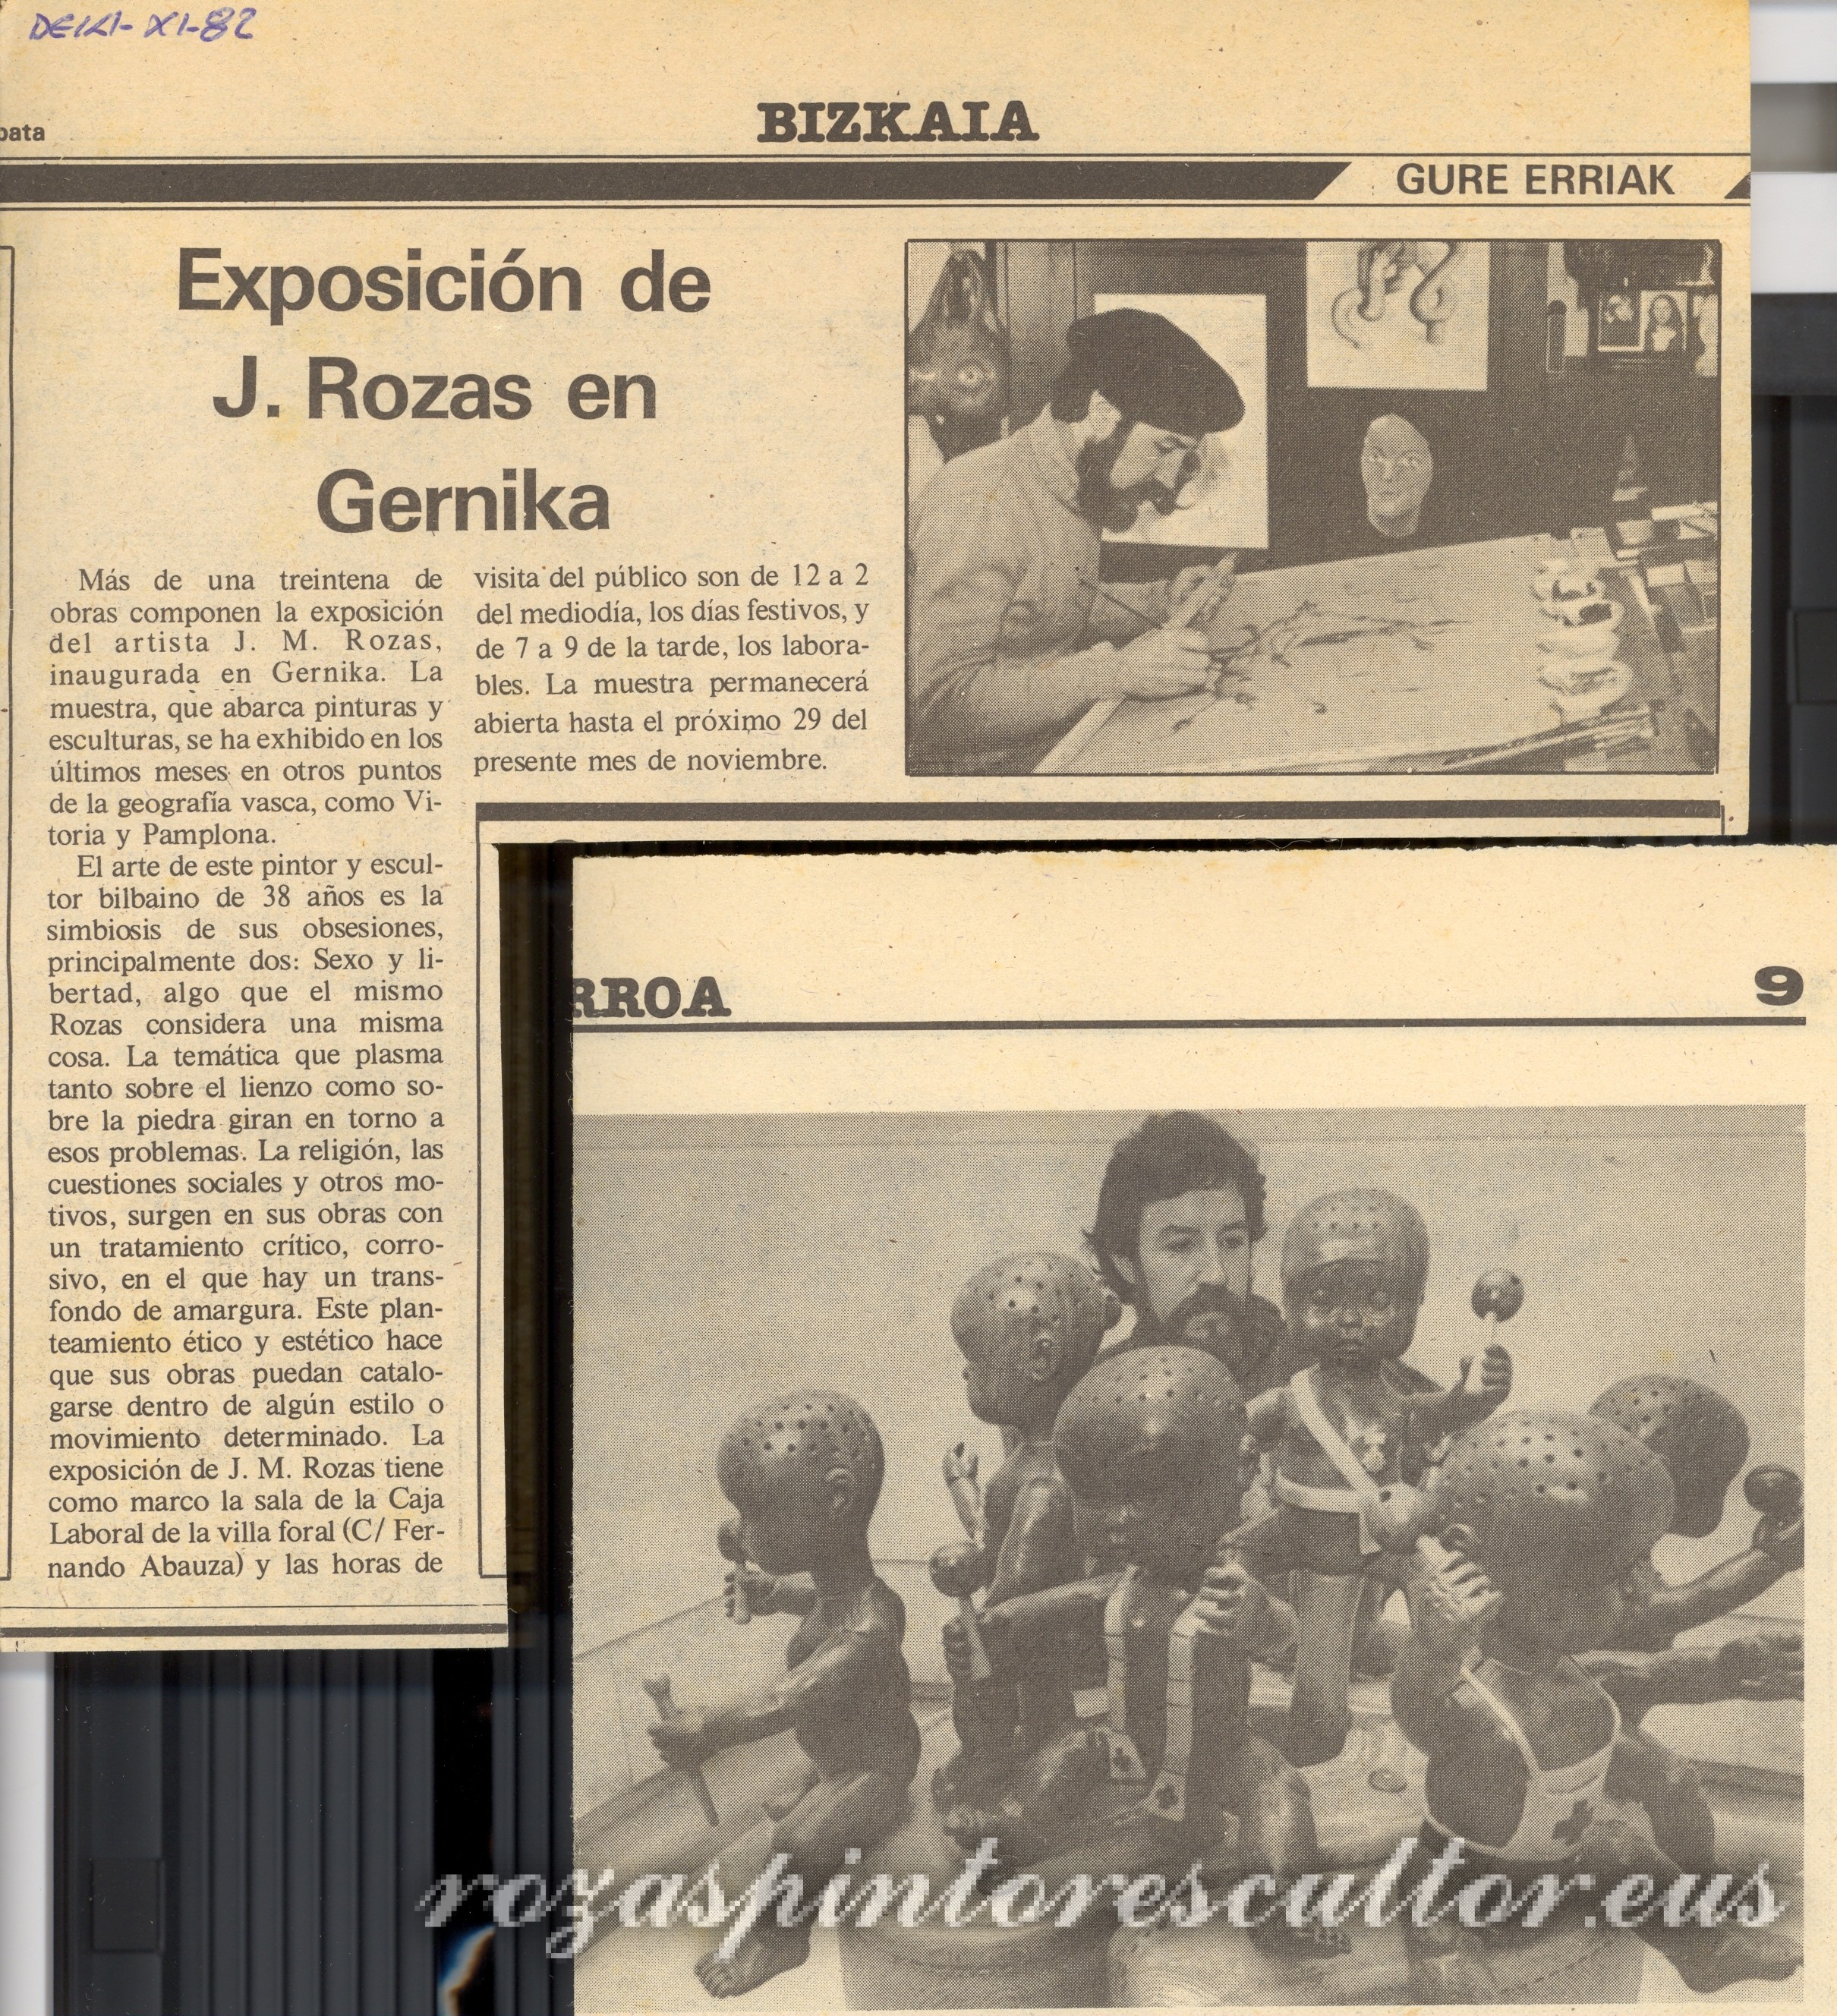 1982 Deia – Exhibition of J.M. Rozas in Gernika